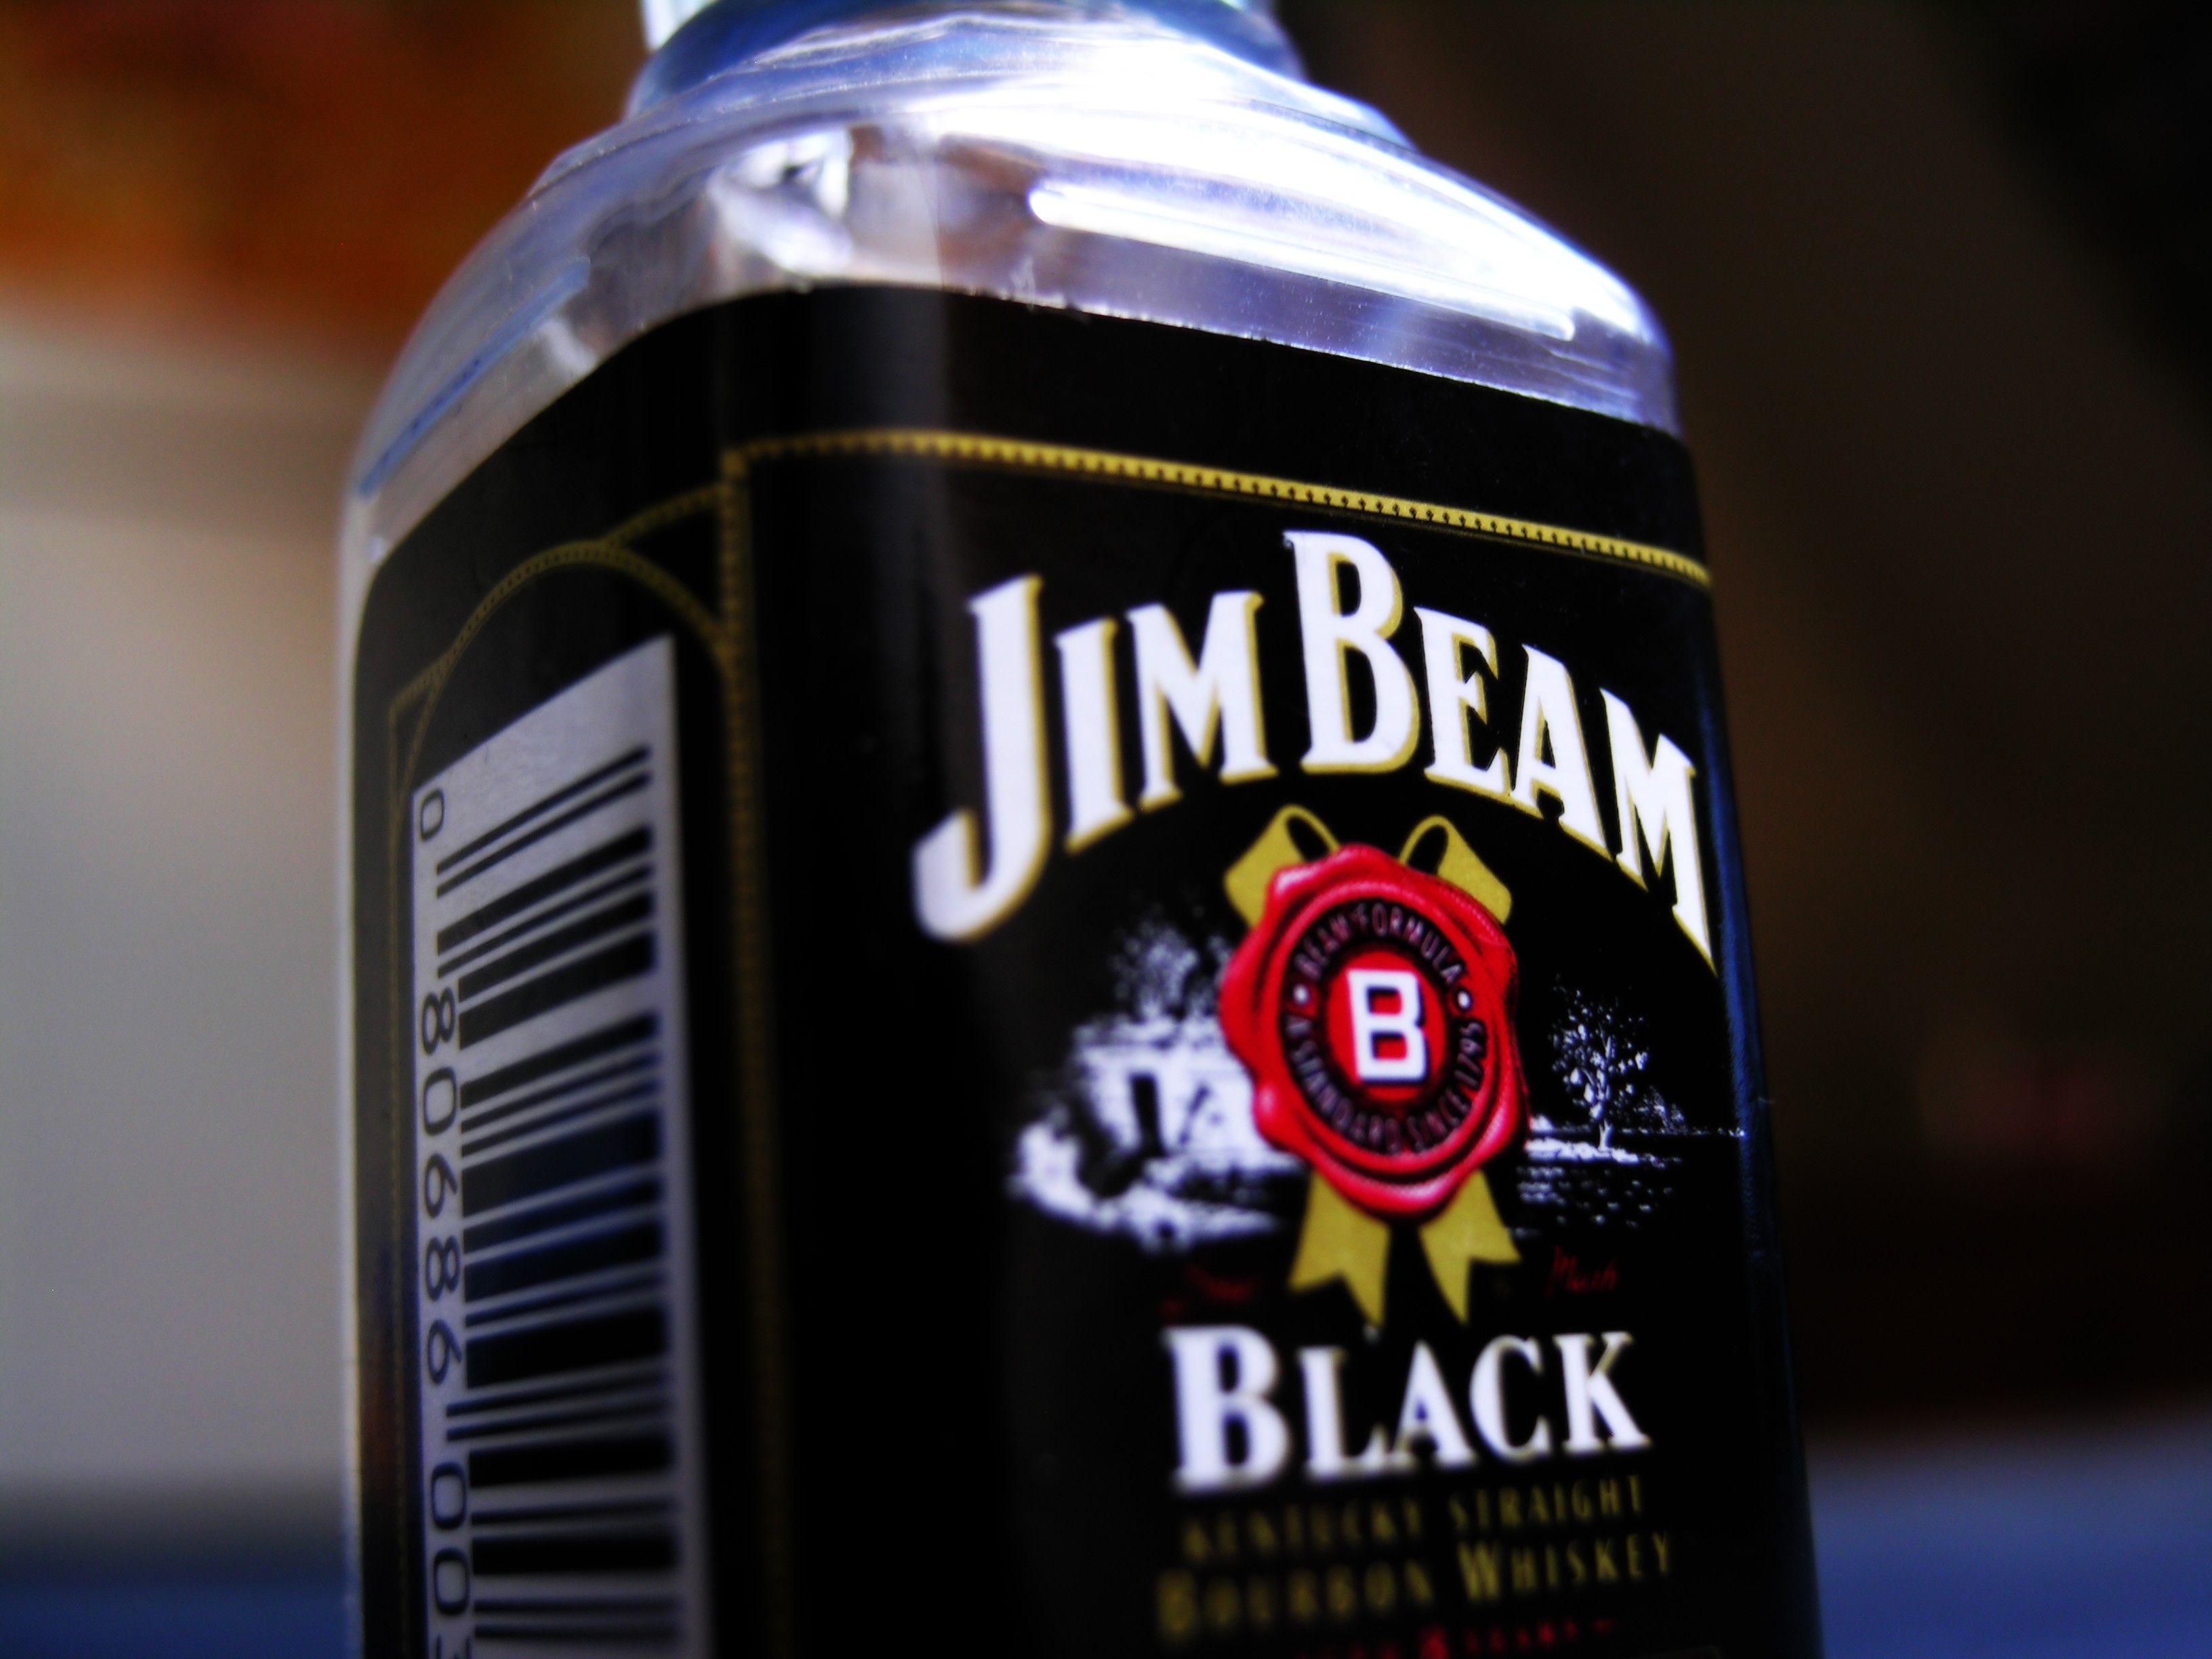 General 3264x2448 alcohol Jim Beam bottles brand closeup